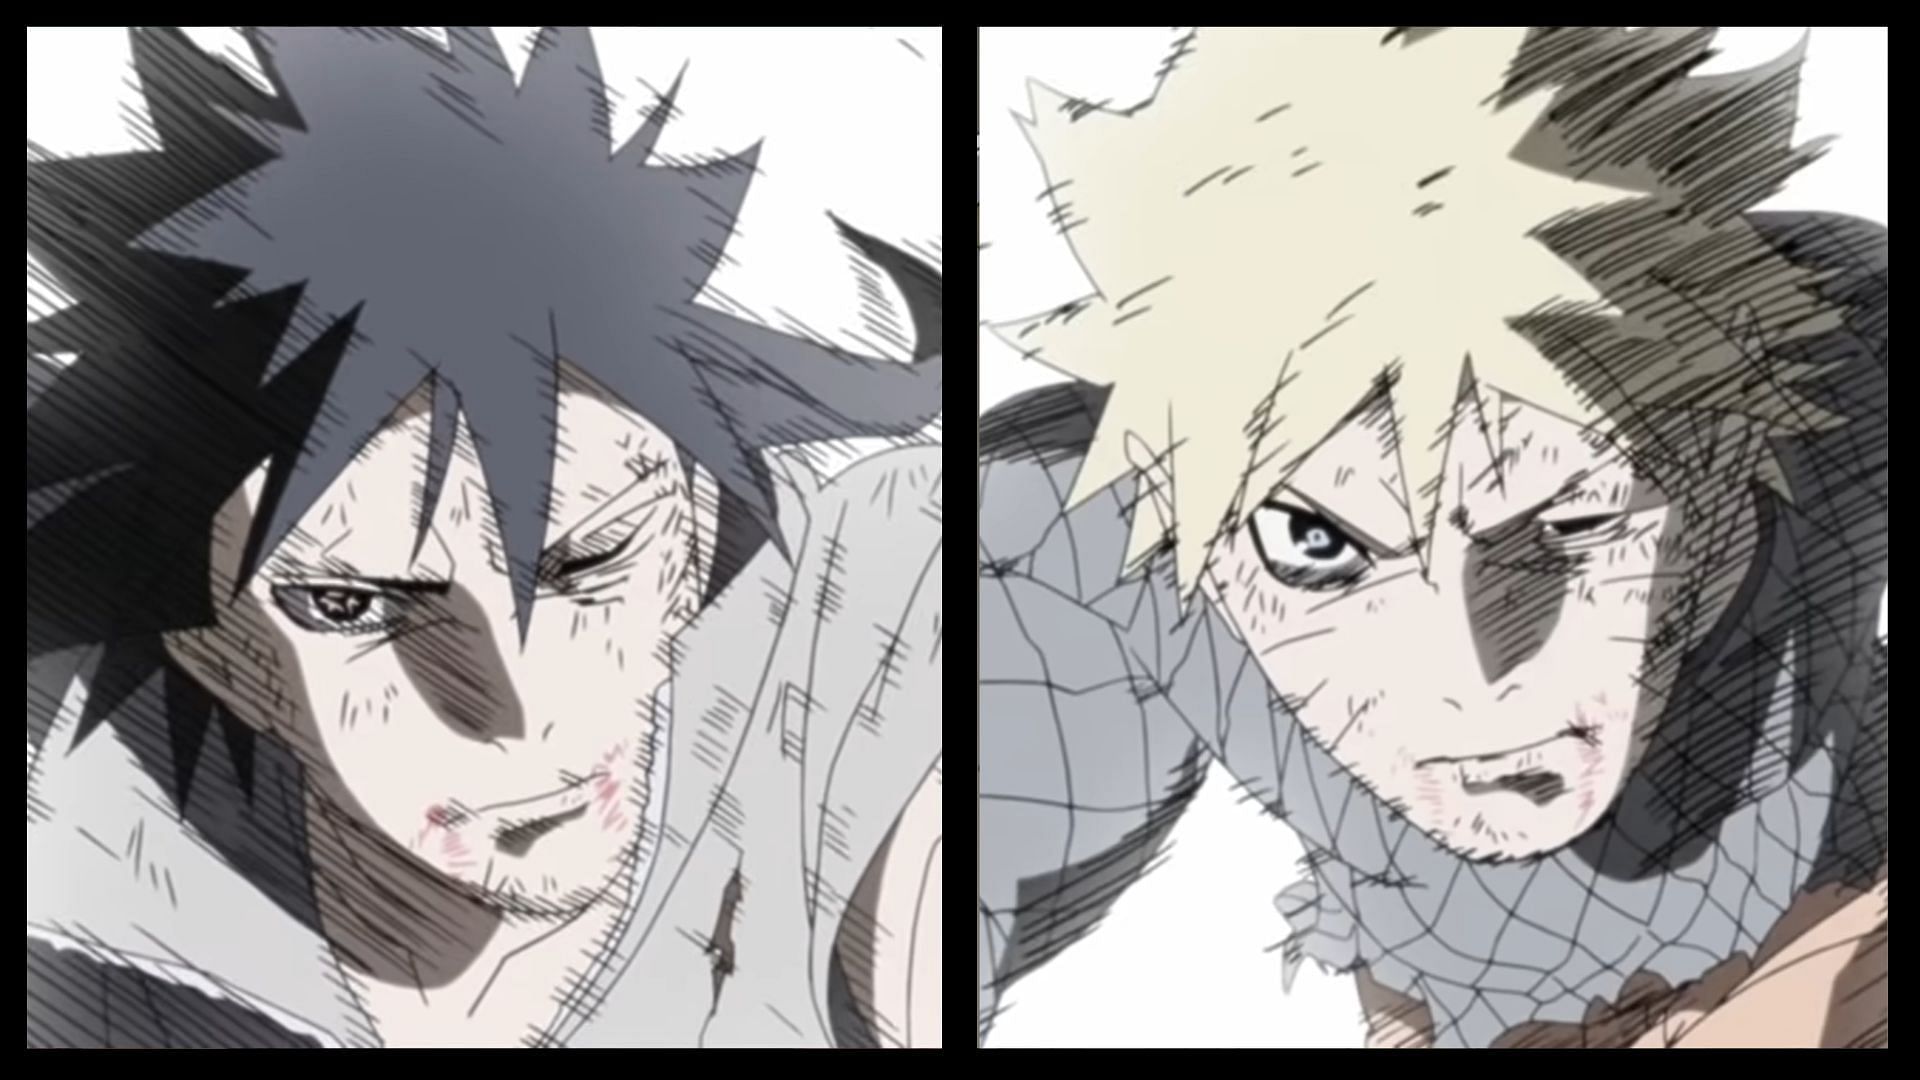 Naruto & Sasuke's Original Final Duel Would Have Been the Series